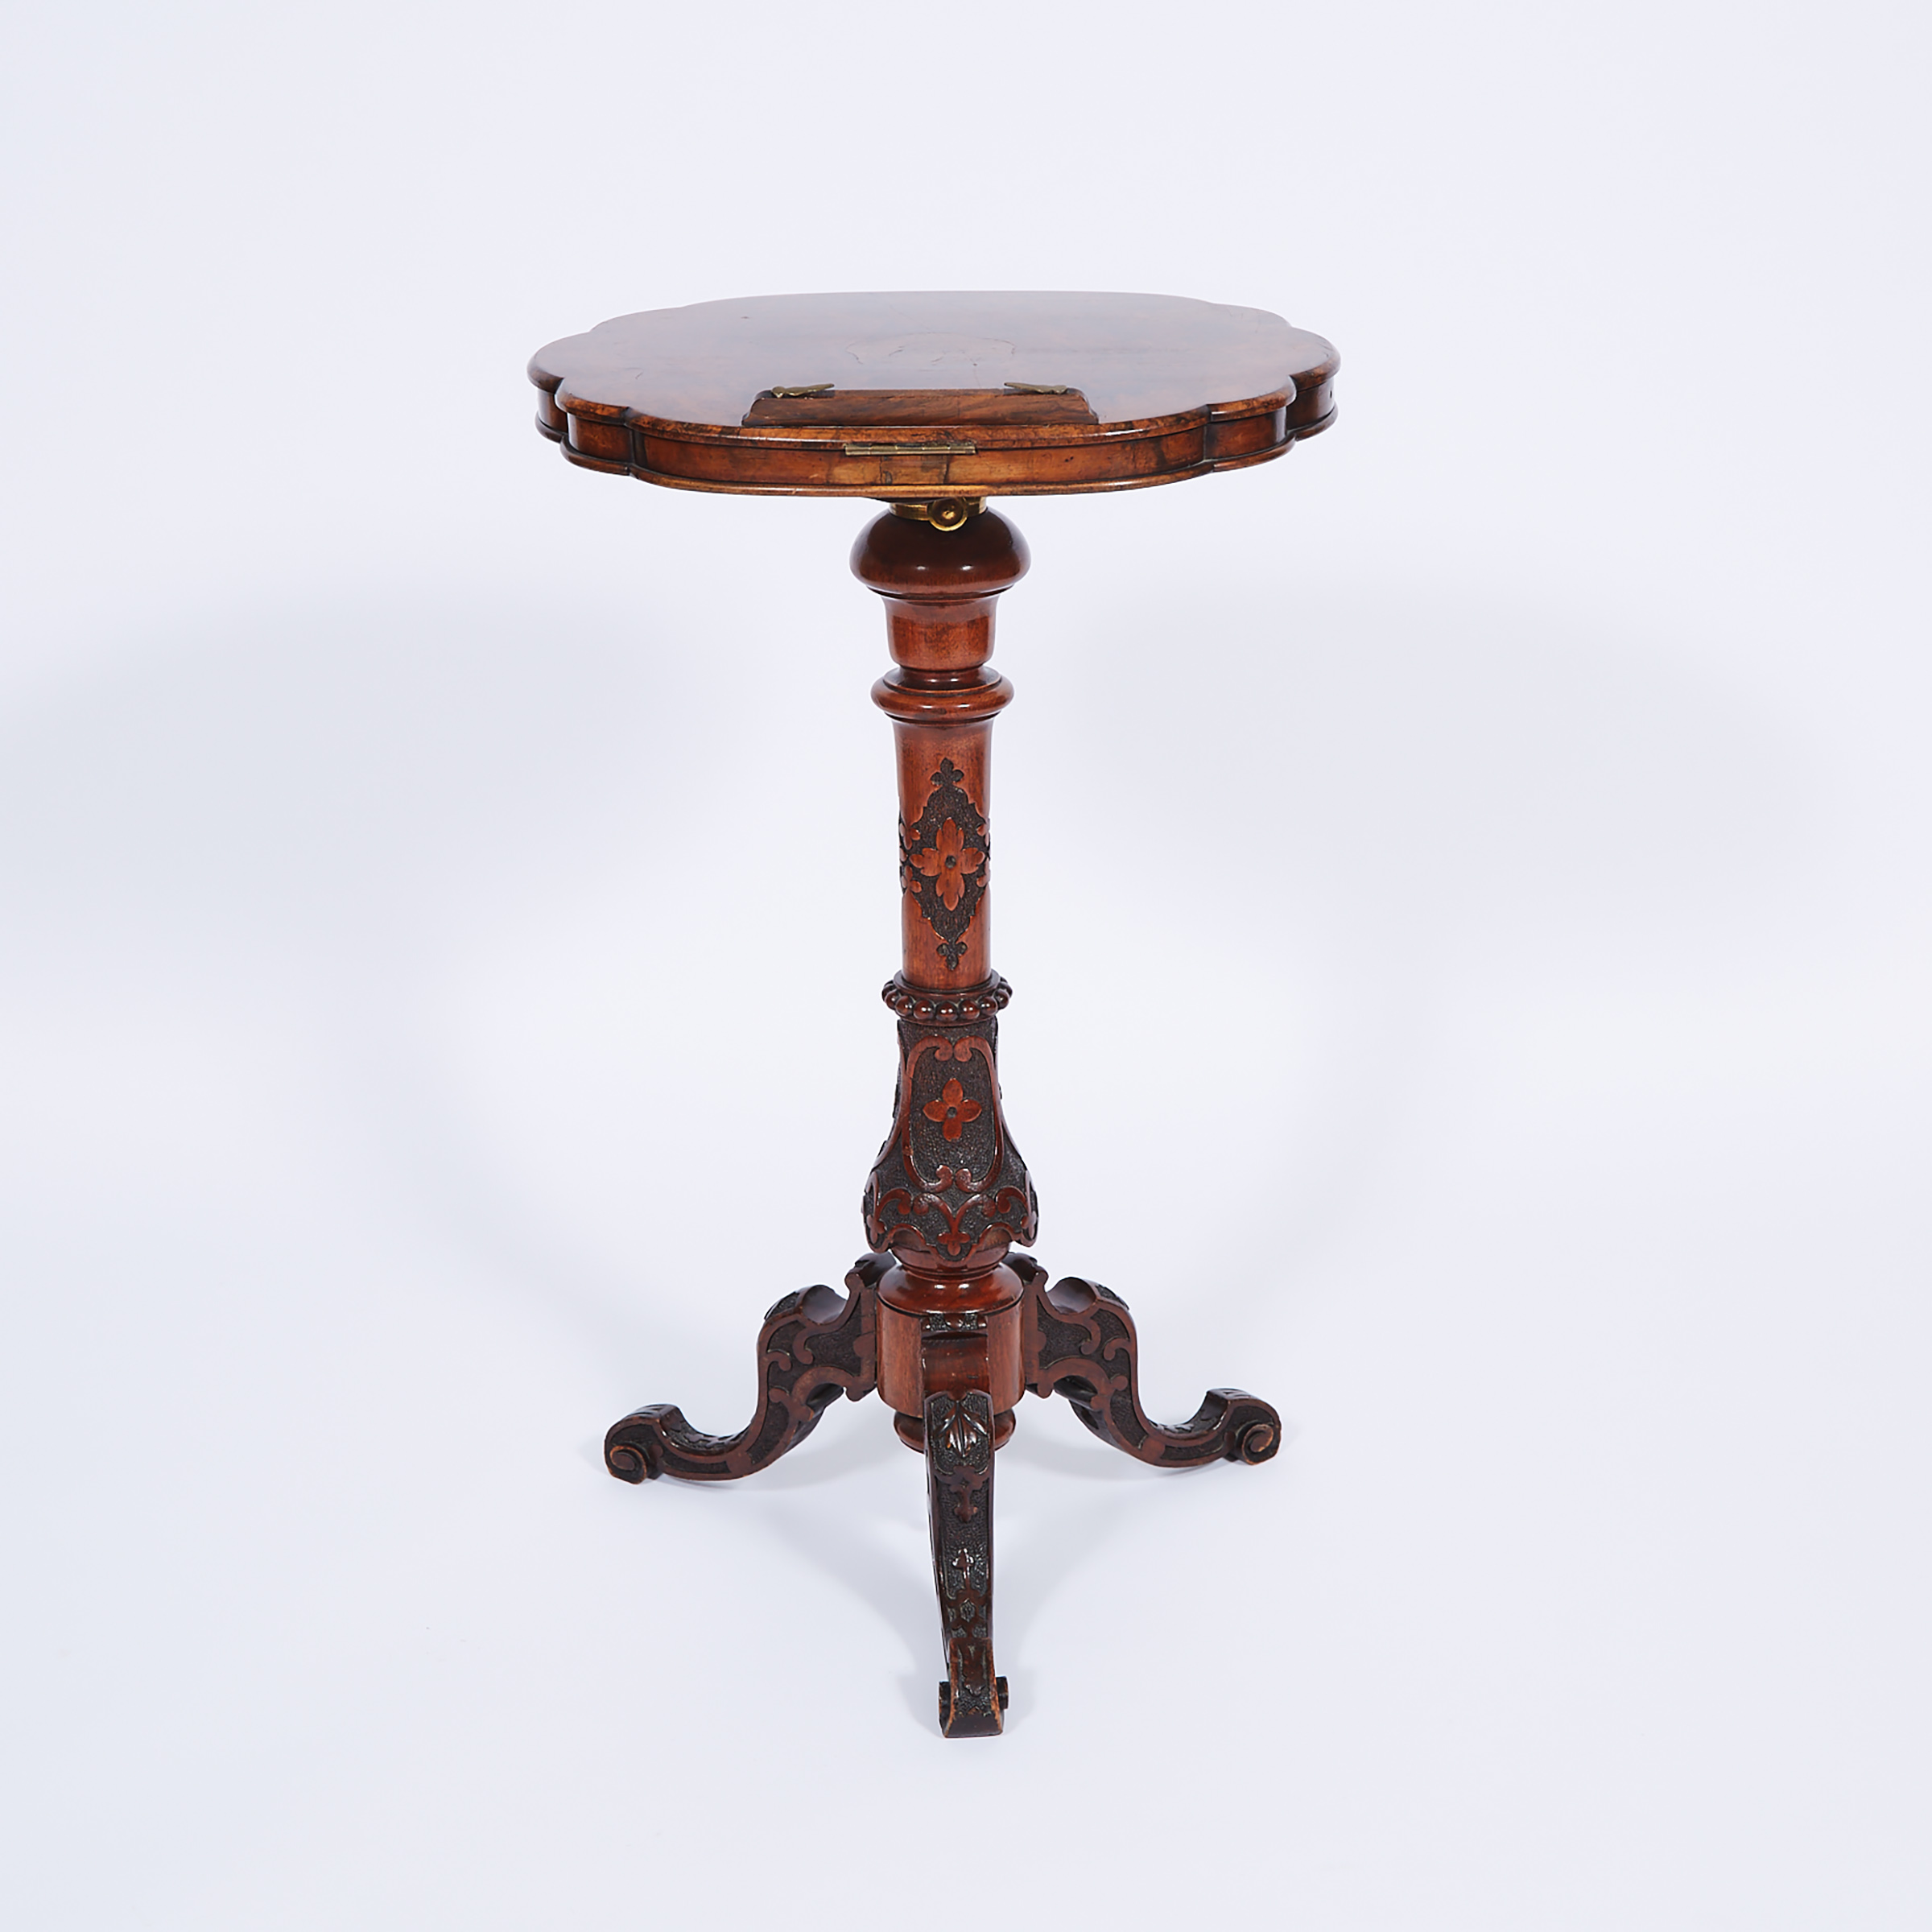 Victorian Burl Walnut Lectern Table, mid 19th century